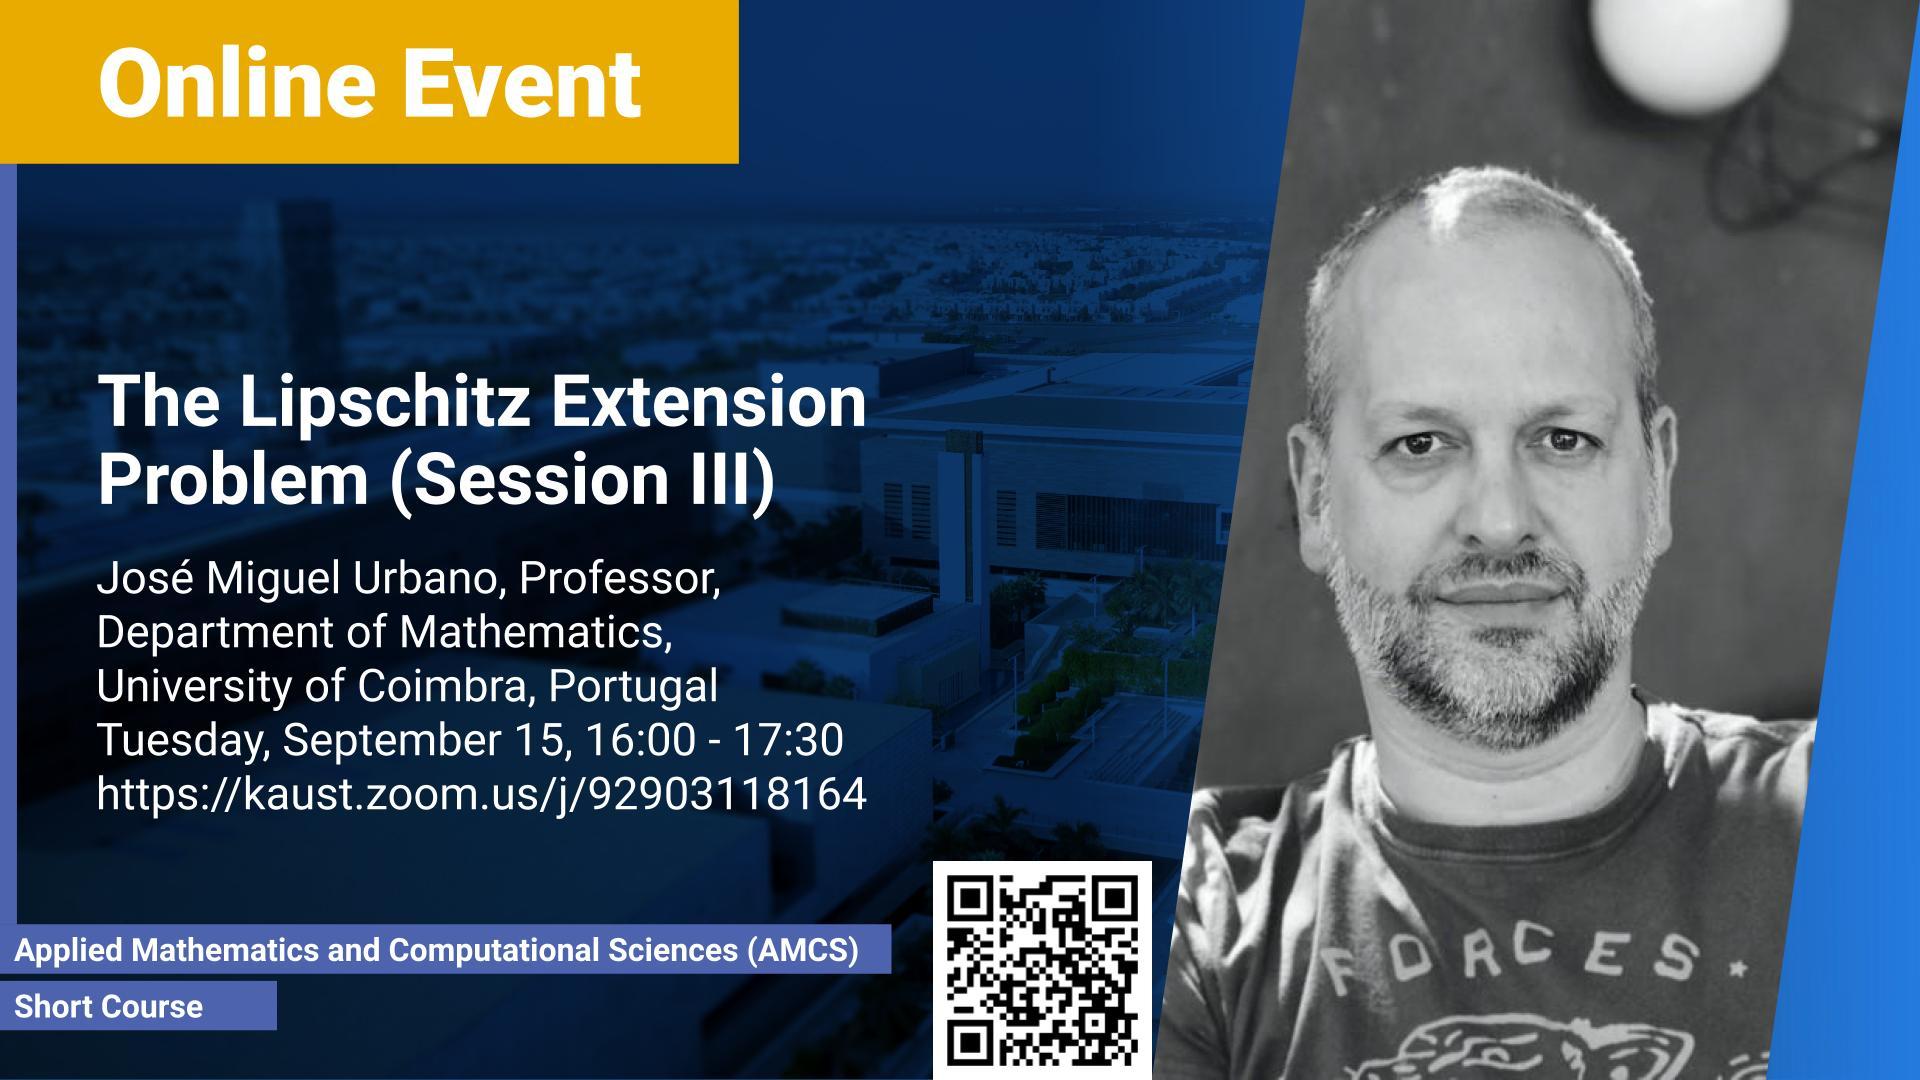 KAUST CEMSE AMCS Short Course José Miguel Urbano The Lipschitz Extension Problem (Session III)